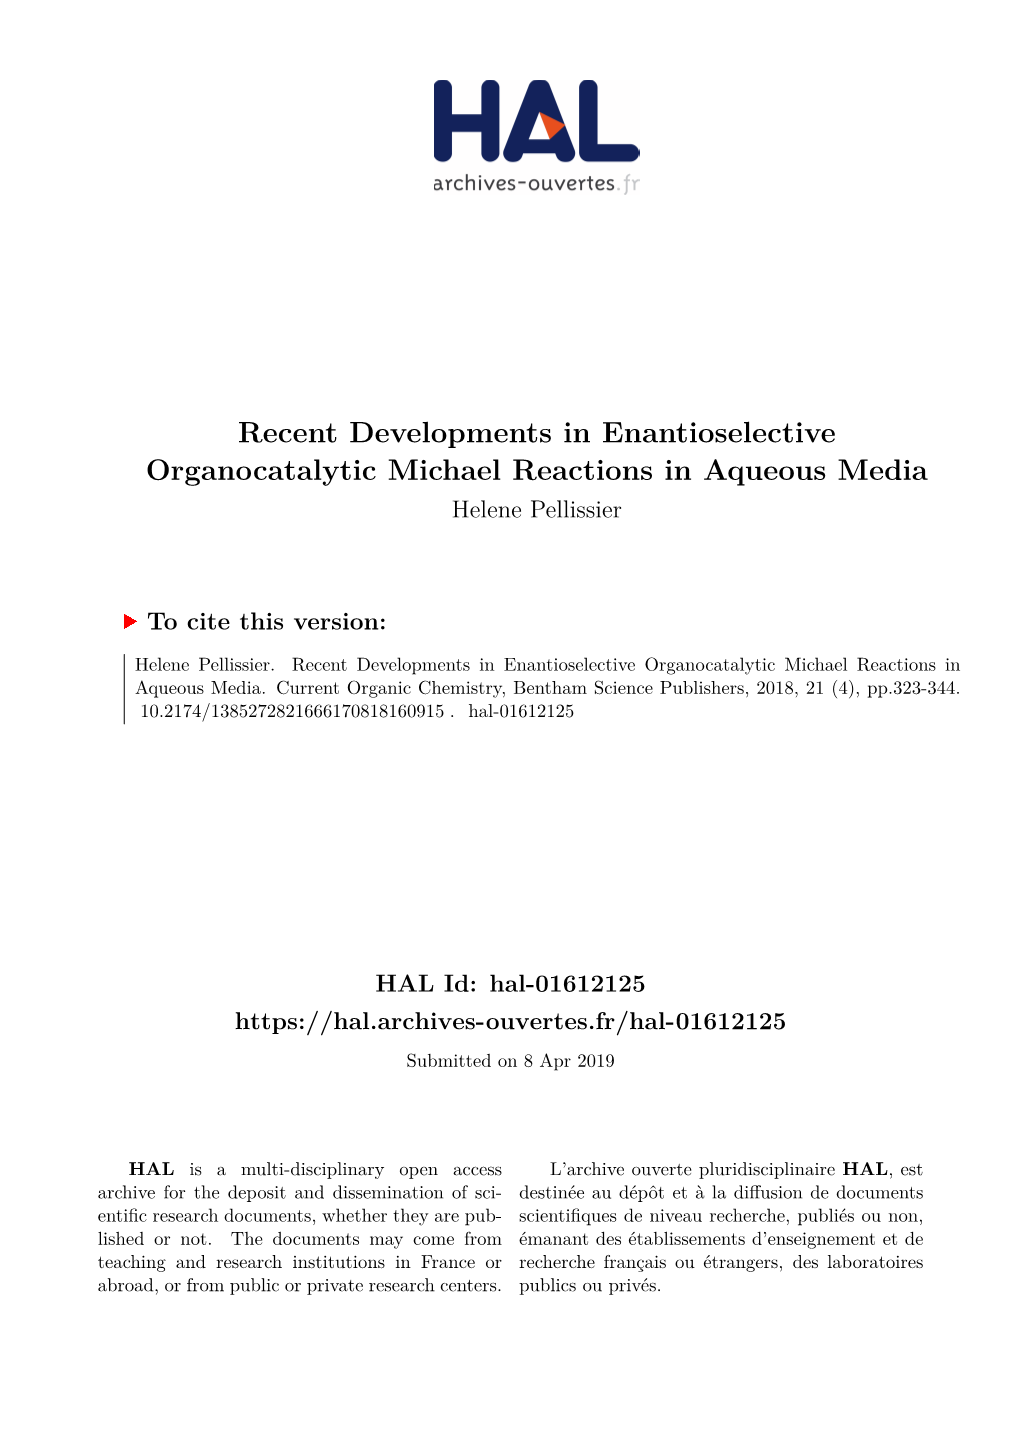 Recent Developments in Enantioselective Organocatalytic Michael Reactions in Aqueous Media Helene Pellissier